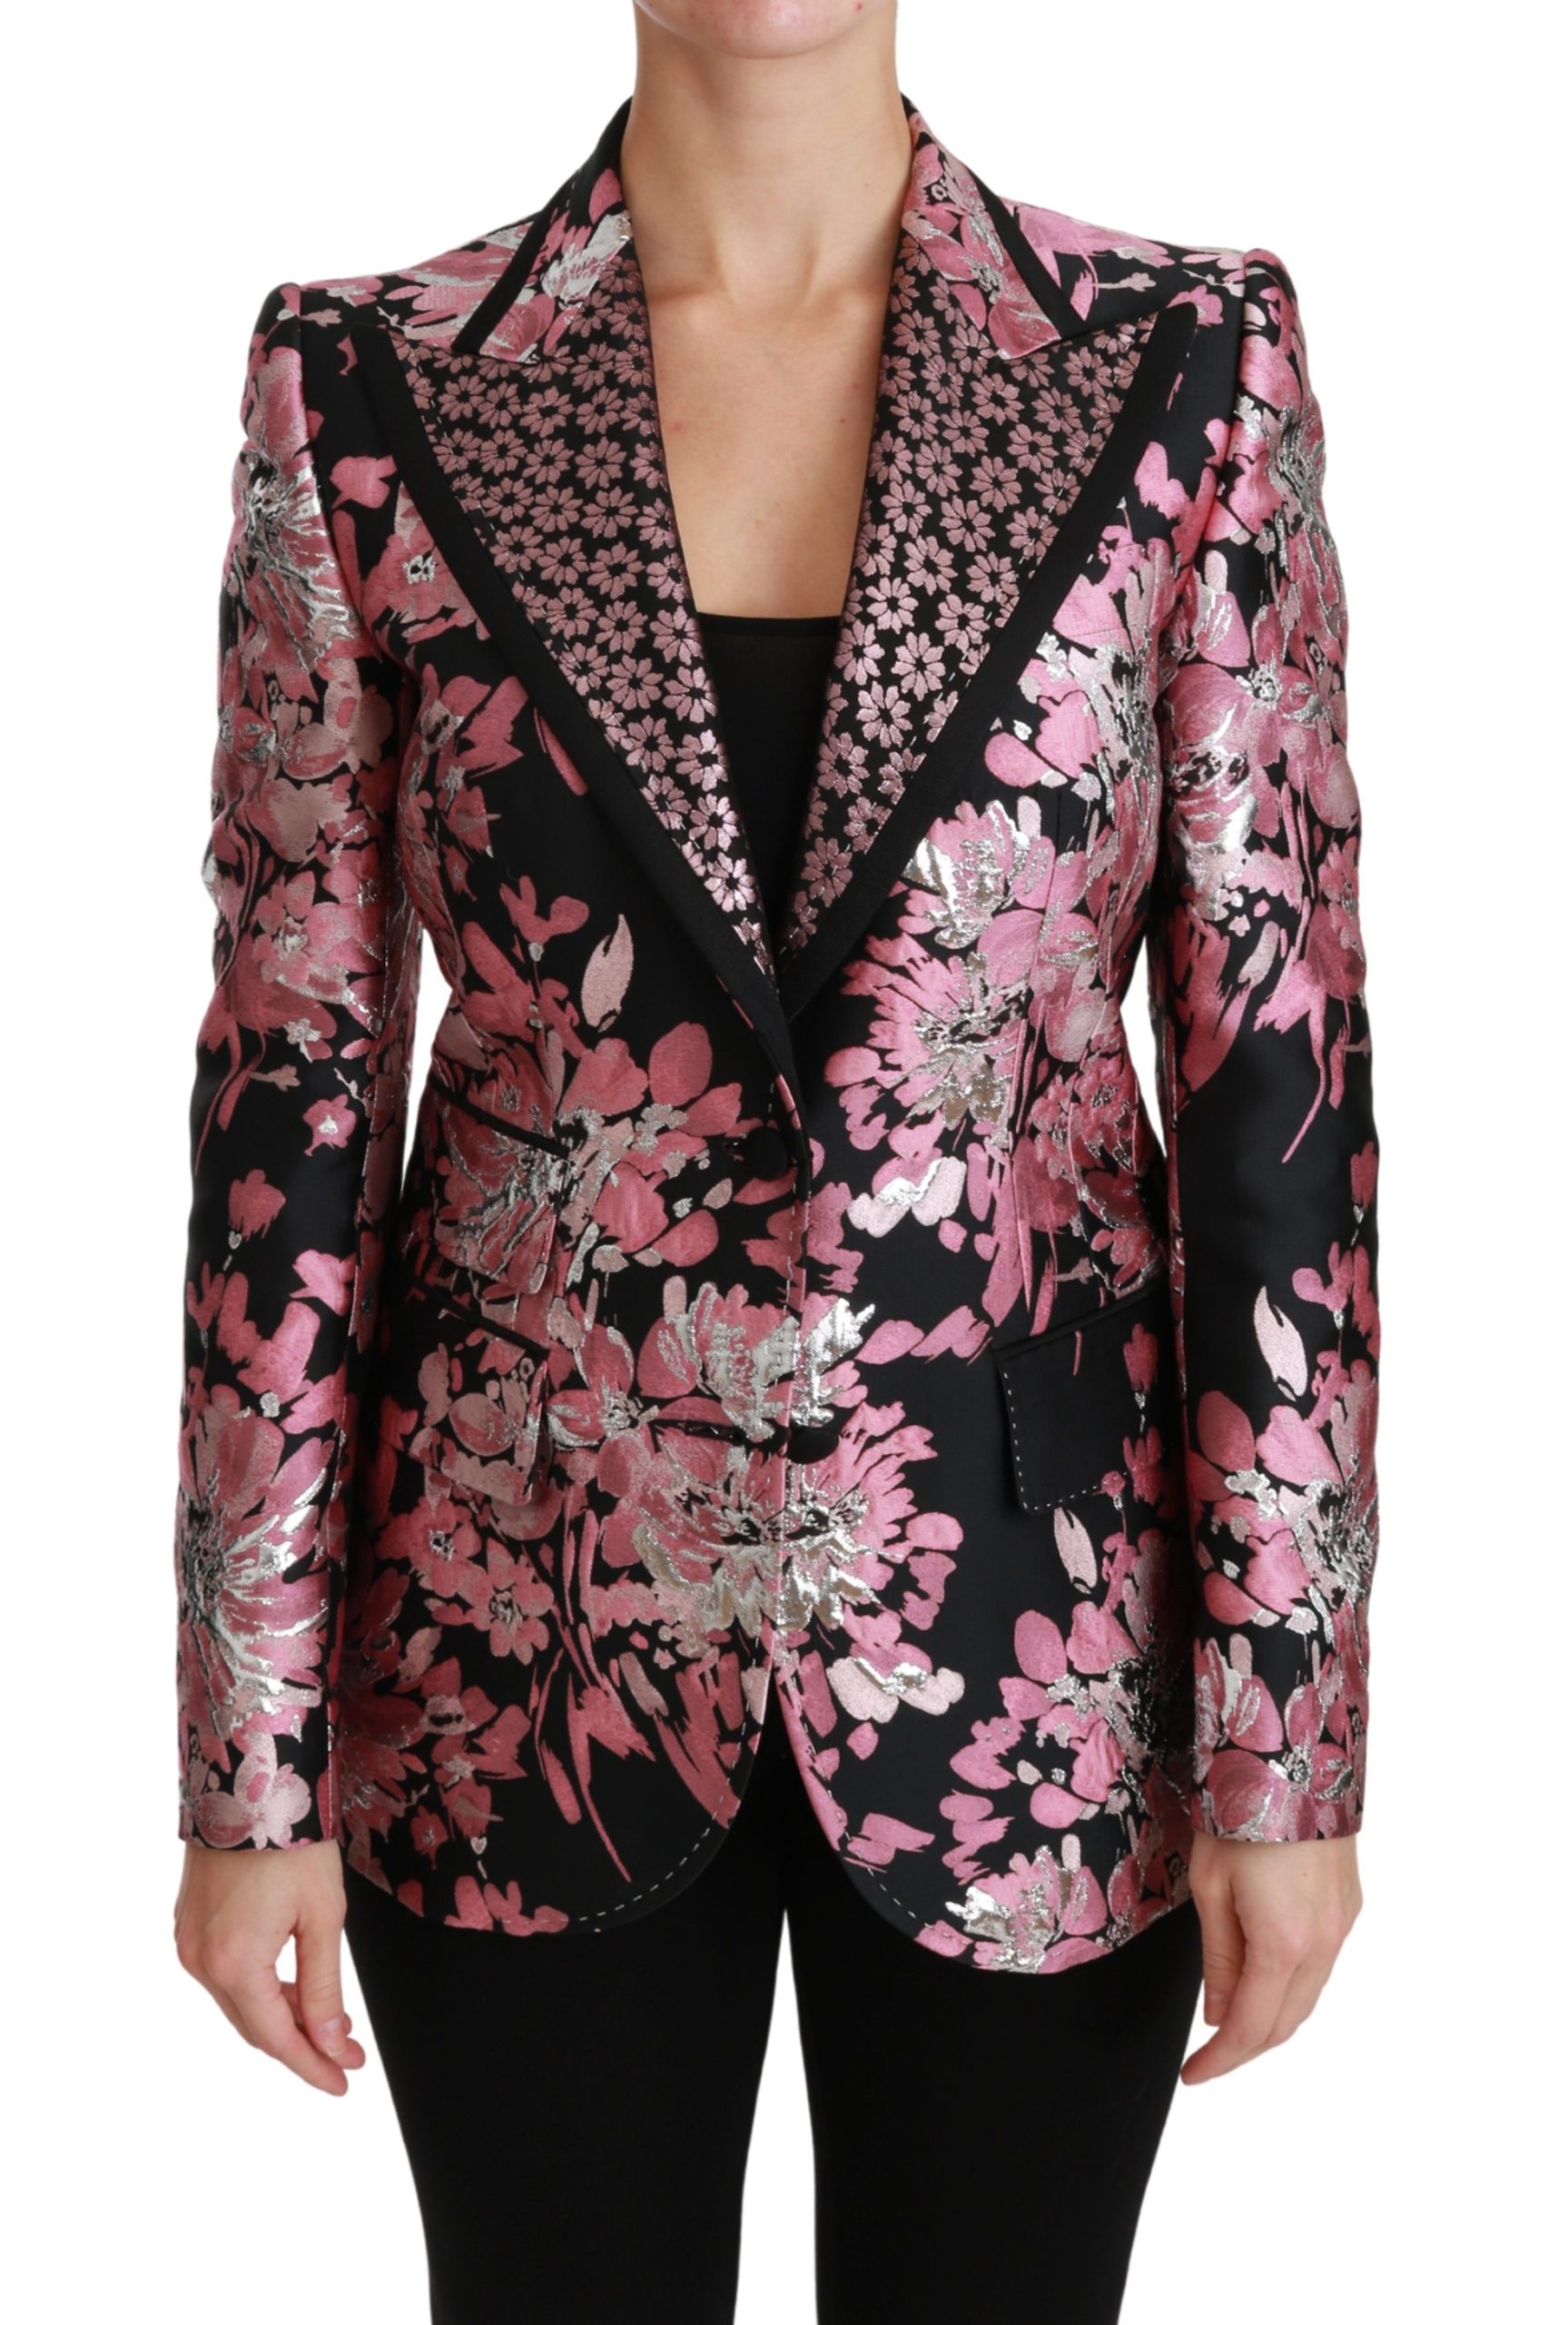 Dolce & Gabbana Women's Pink Jacquard Slim Fit Blazer Black JKT2566 - IT42|M